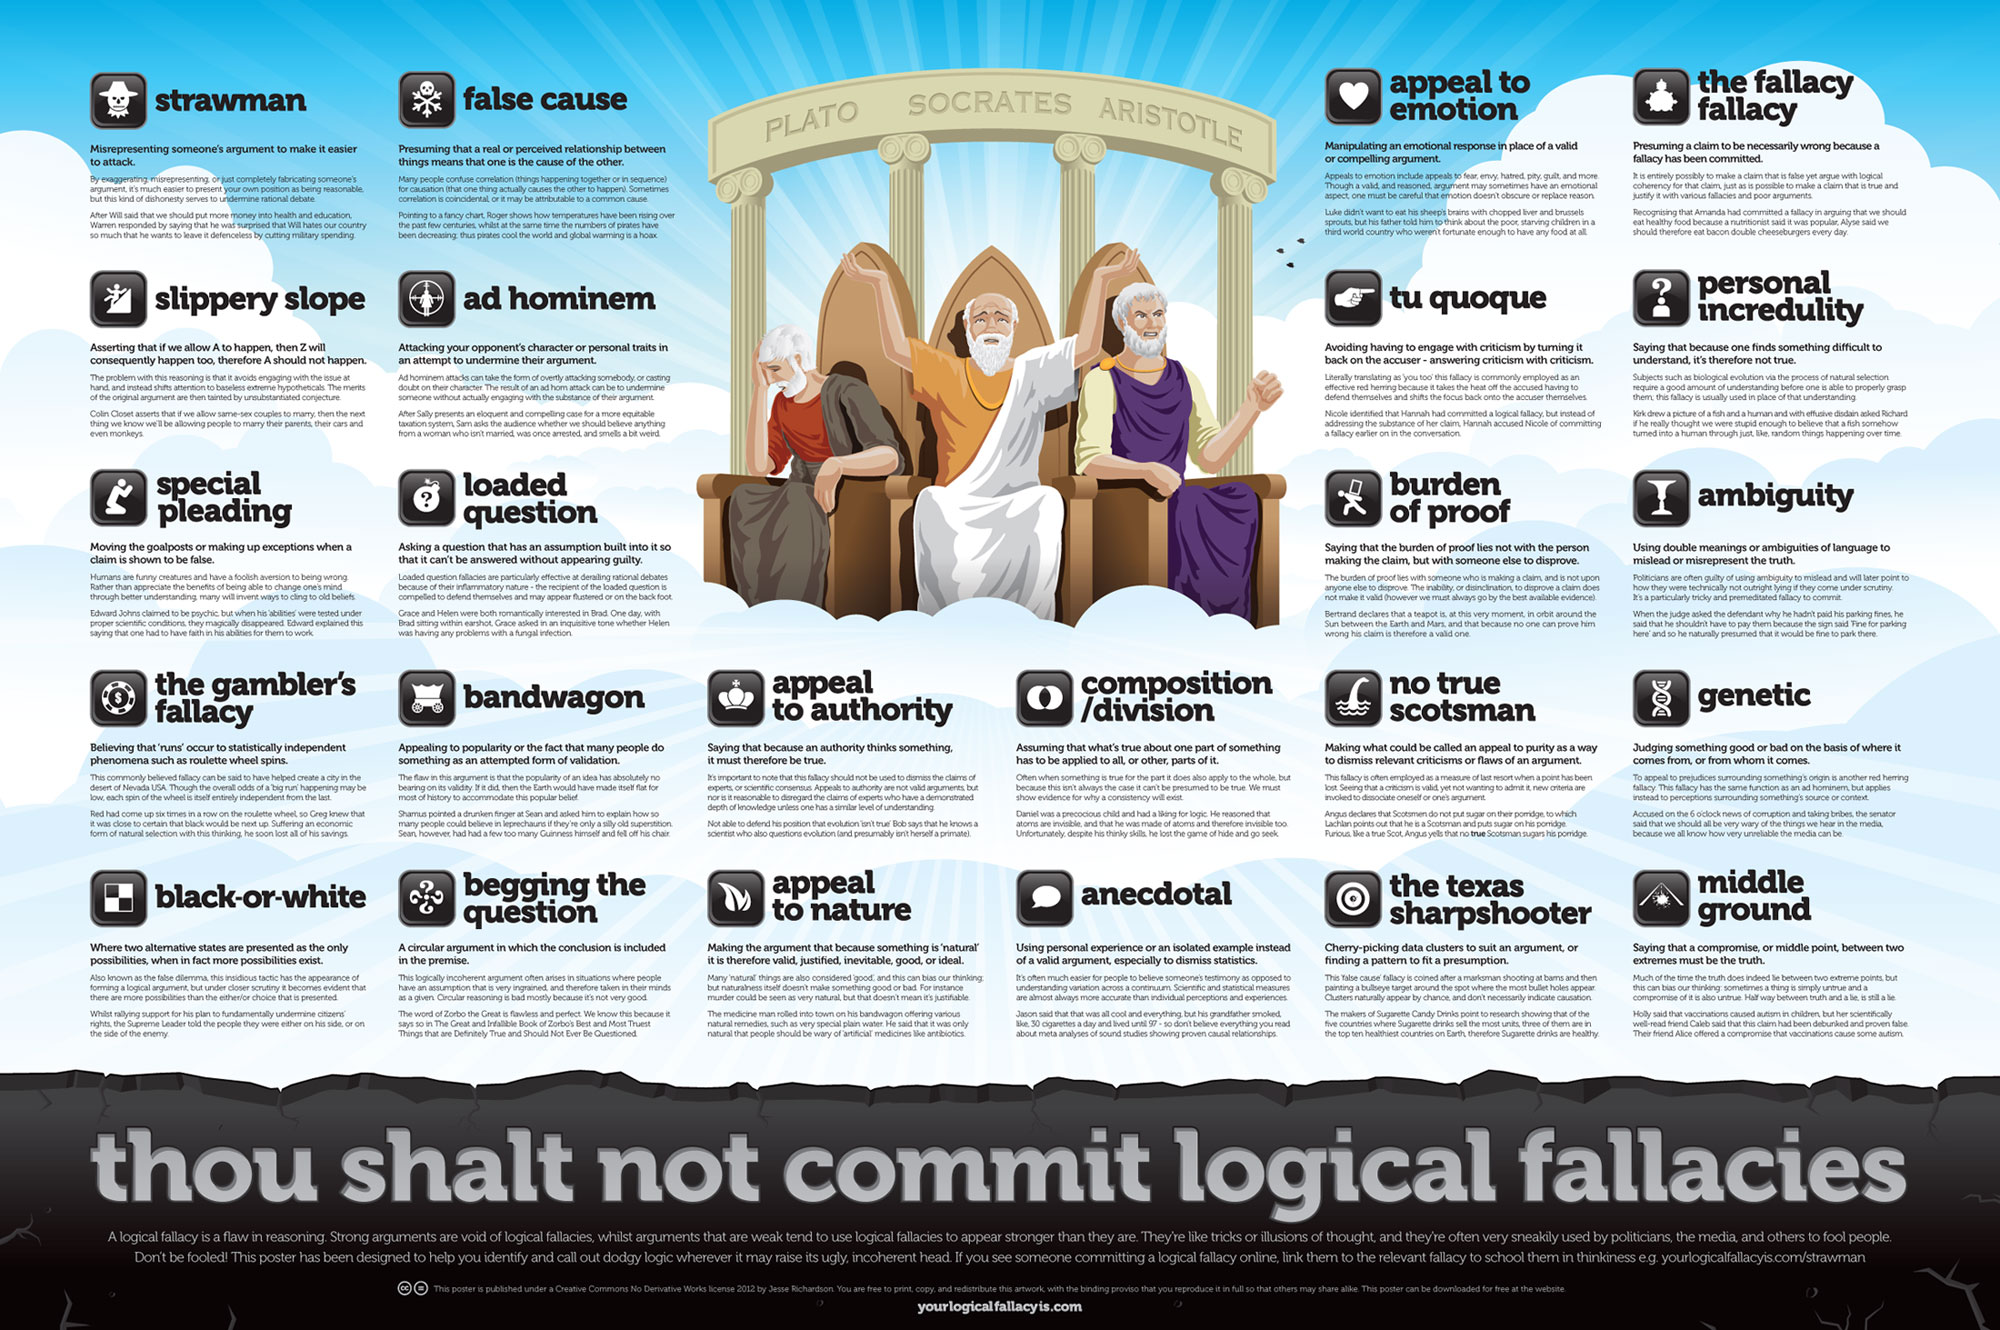 Logical Fallacies poster from yourlogicalfallacyis.com